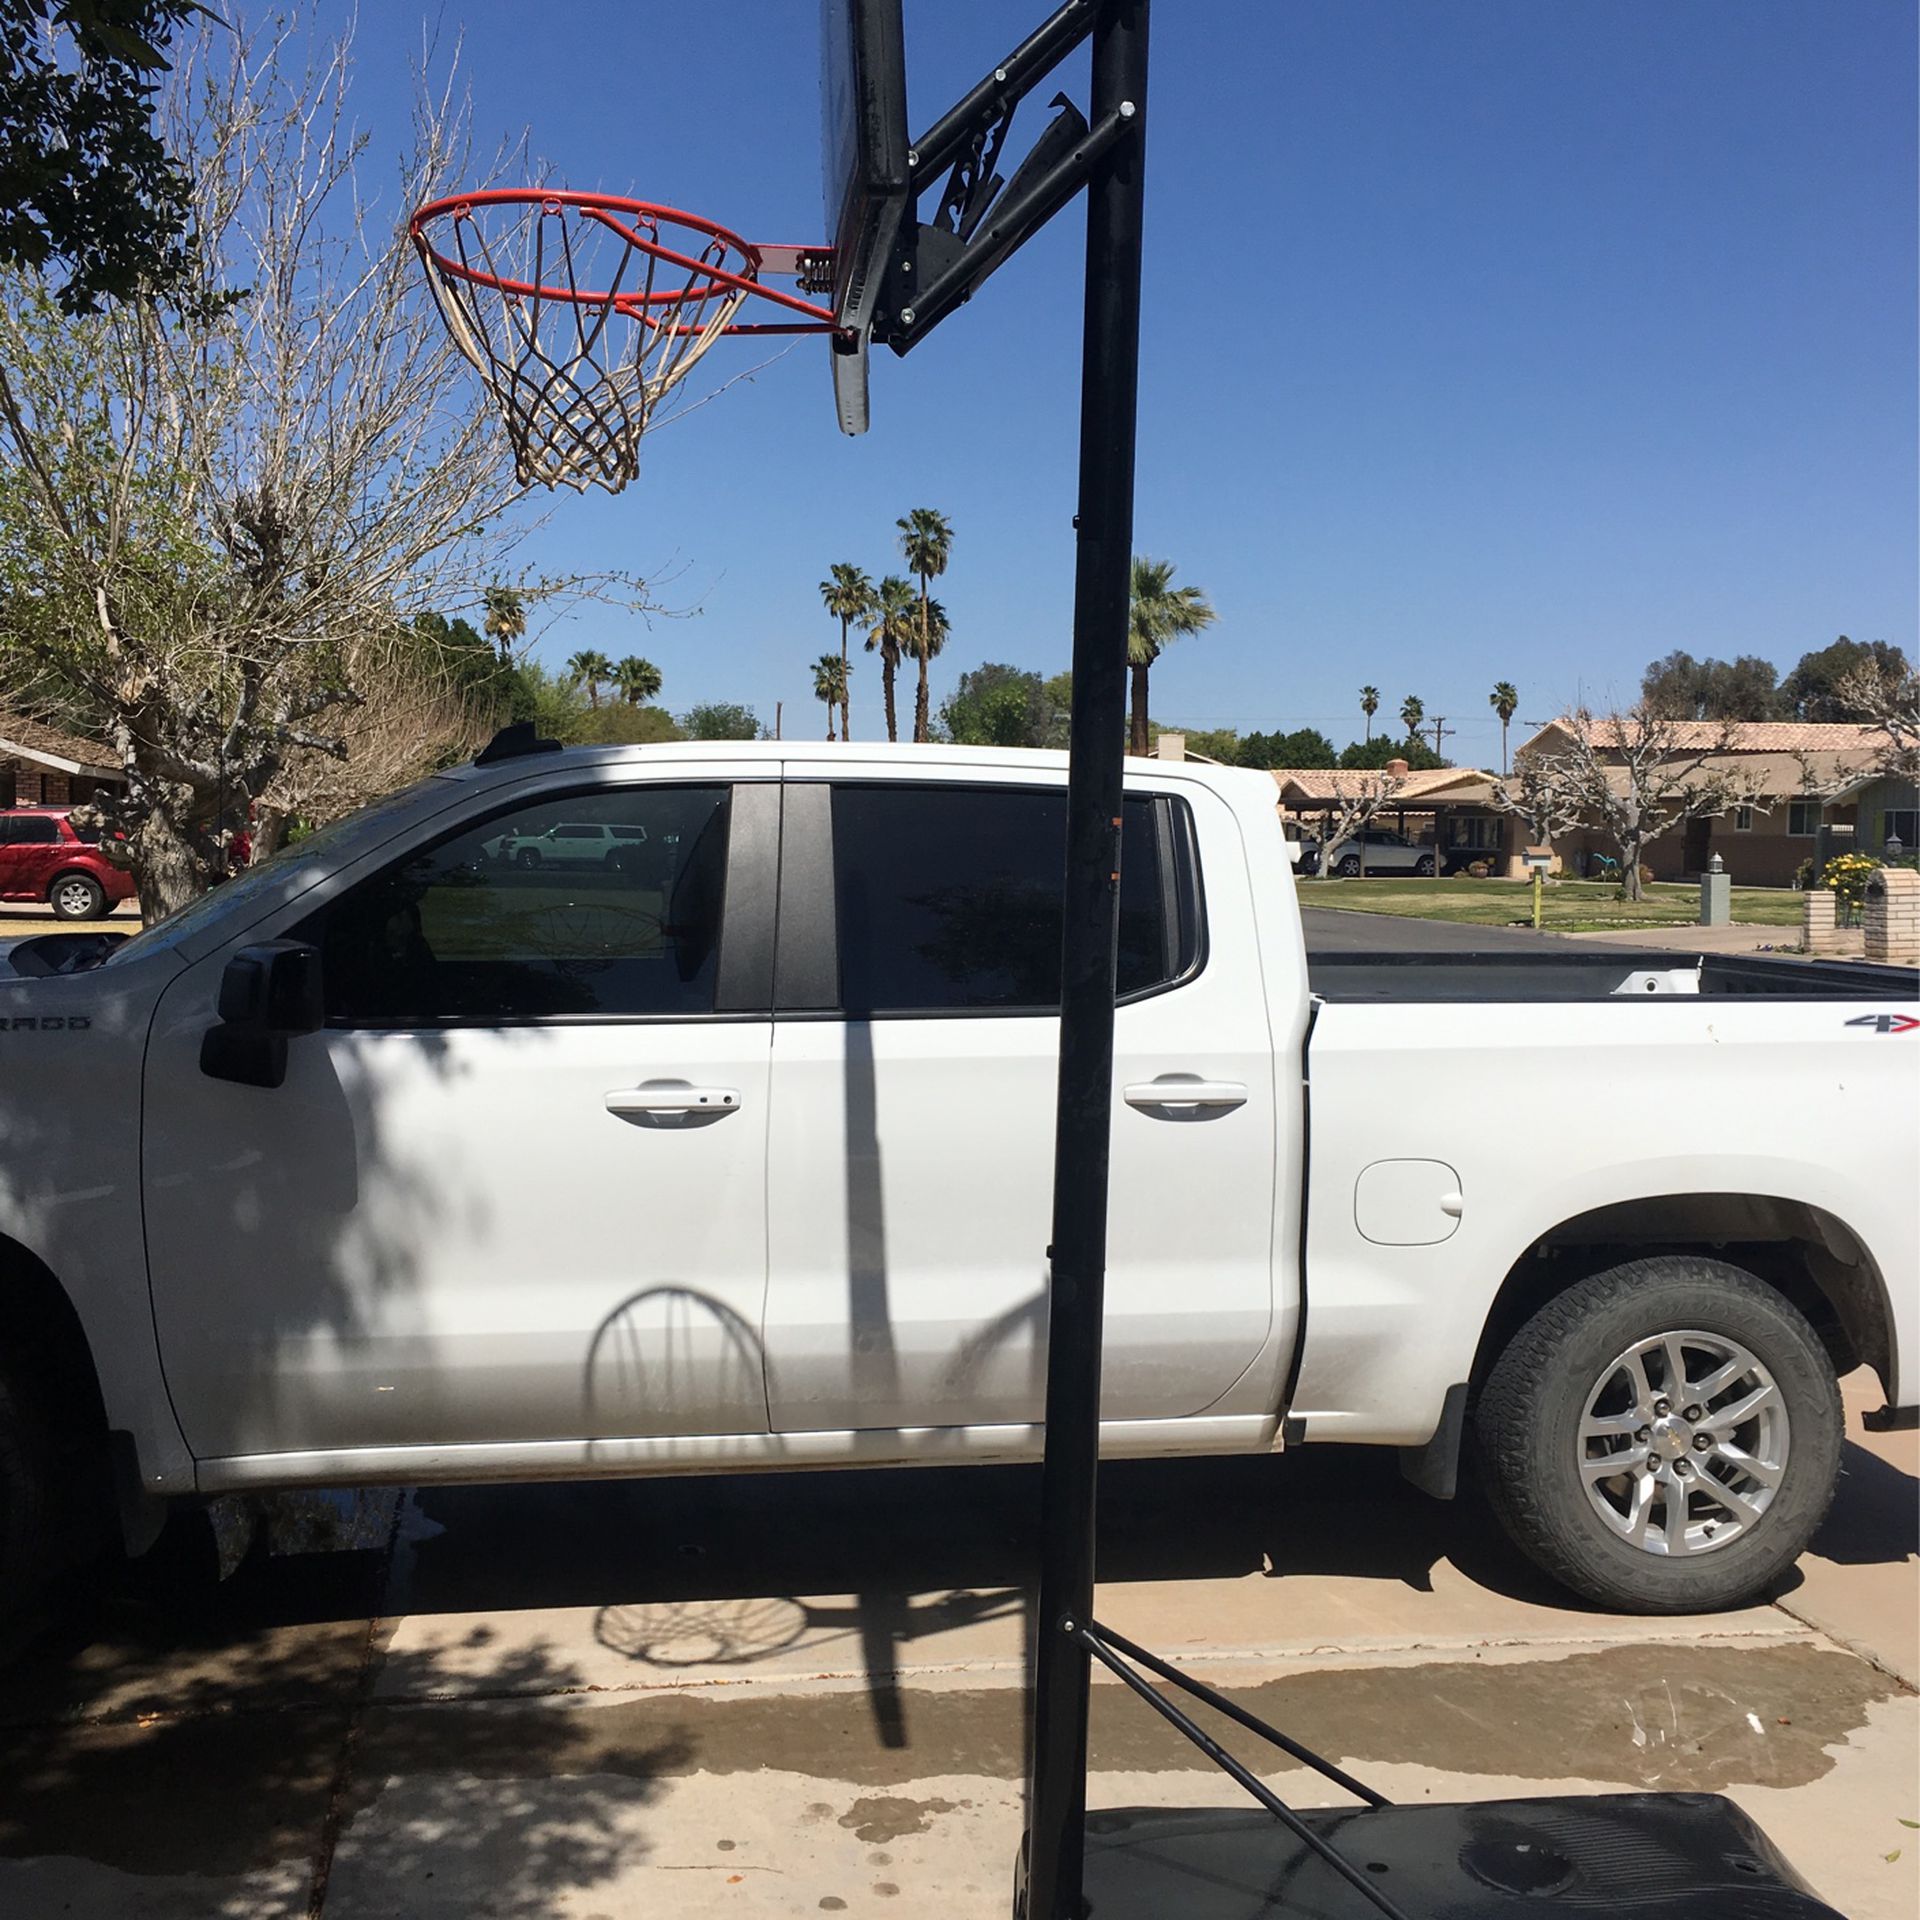 Lifetime adjustable Basketball hoop